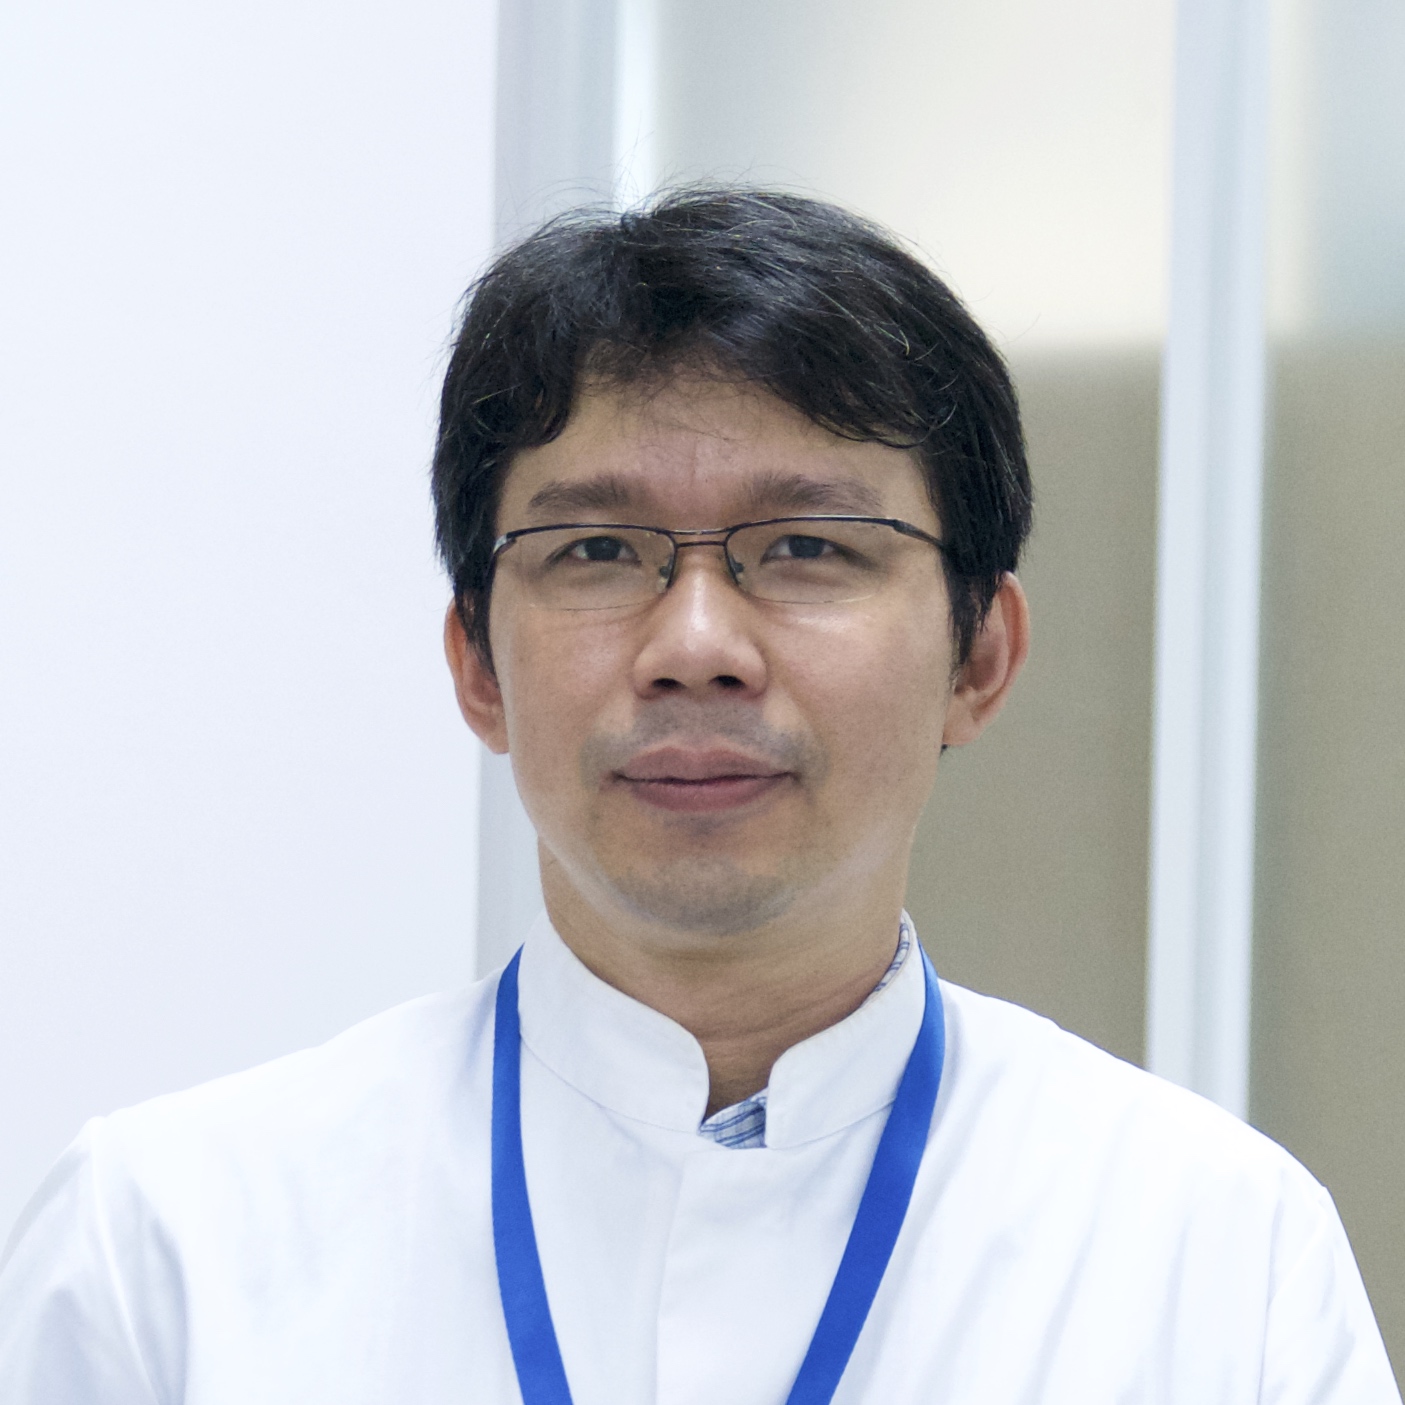 Dr. NGUYEN HUU HUNG